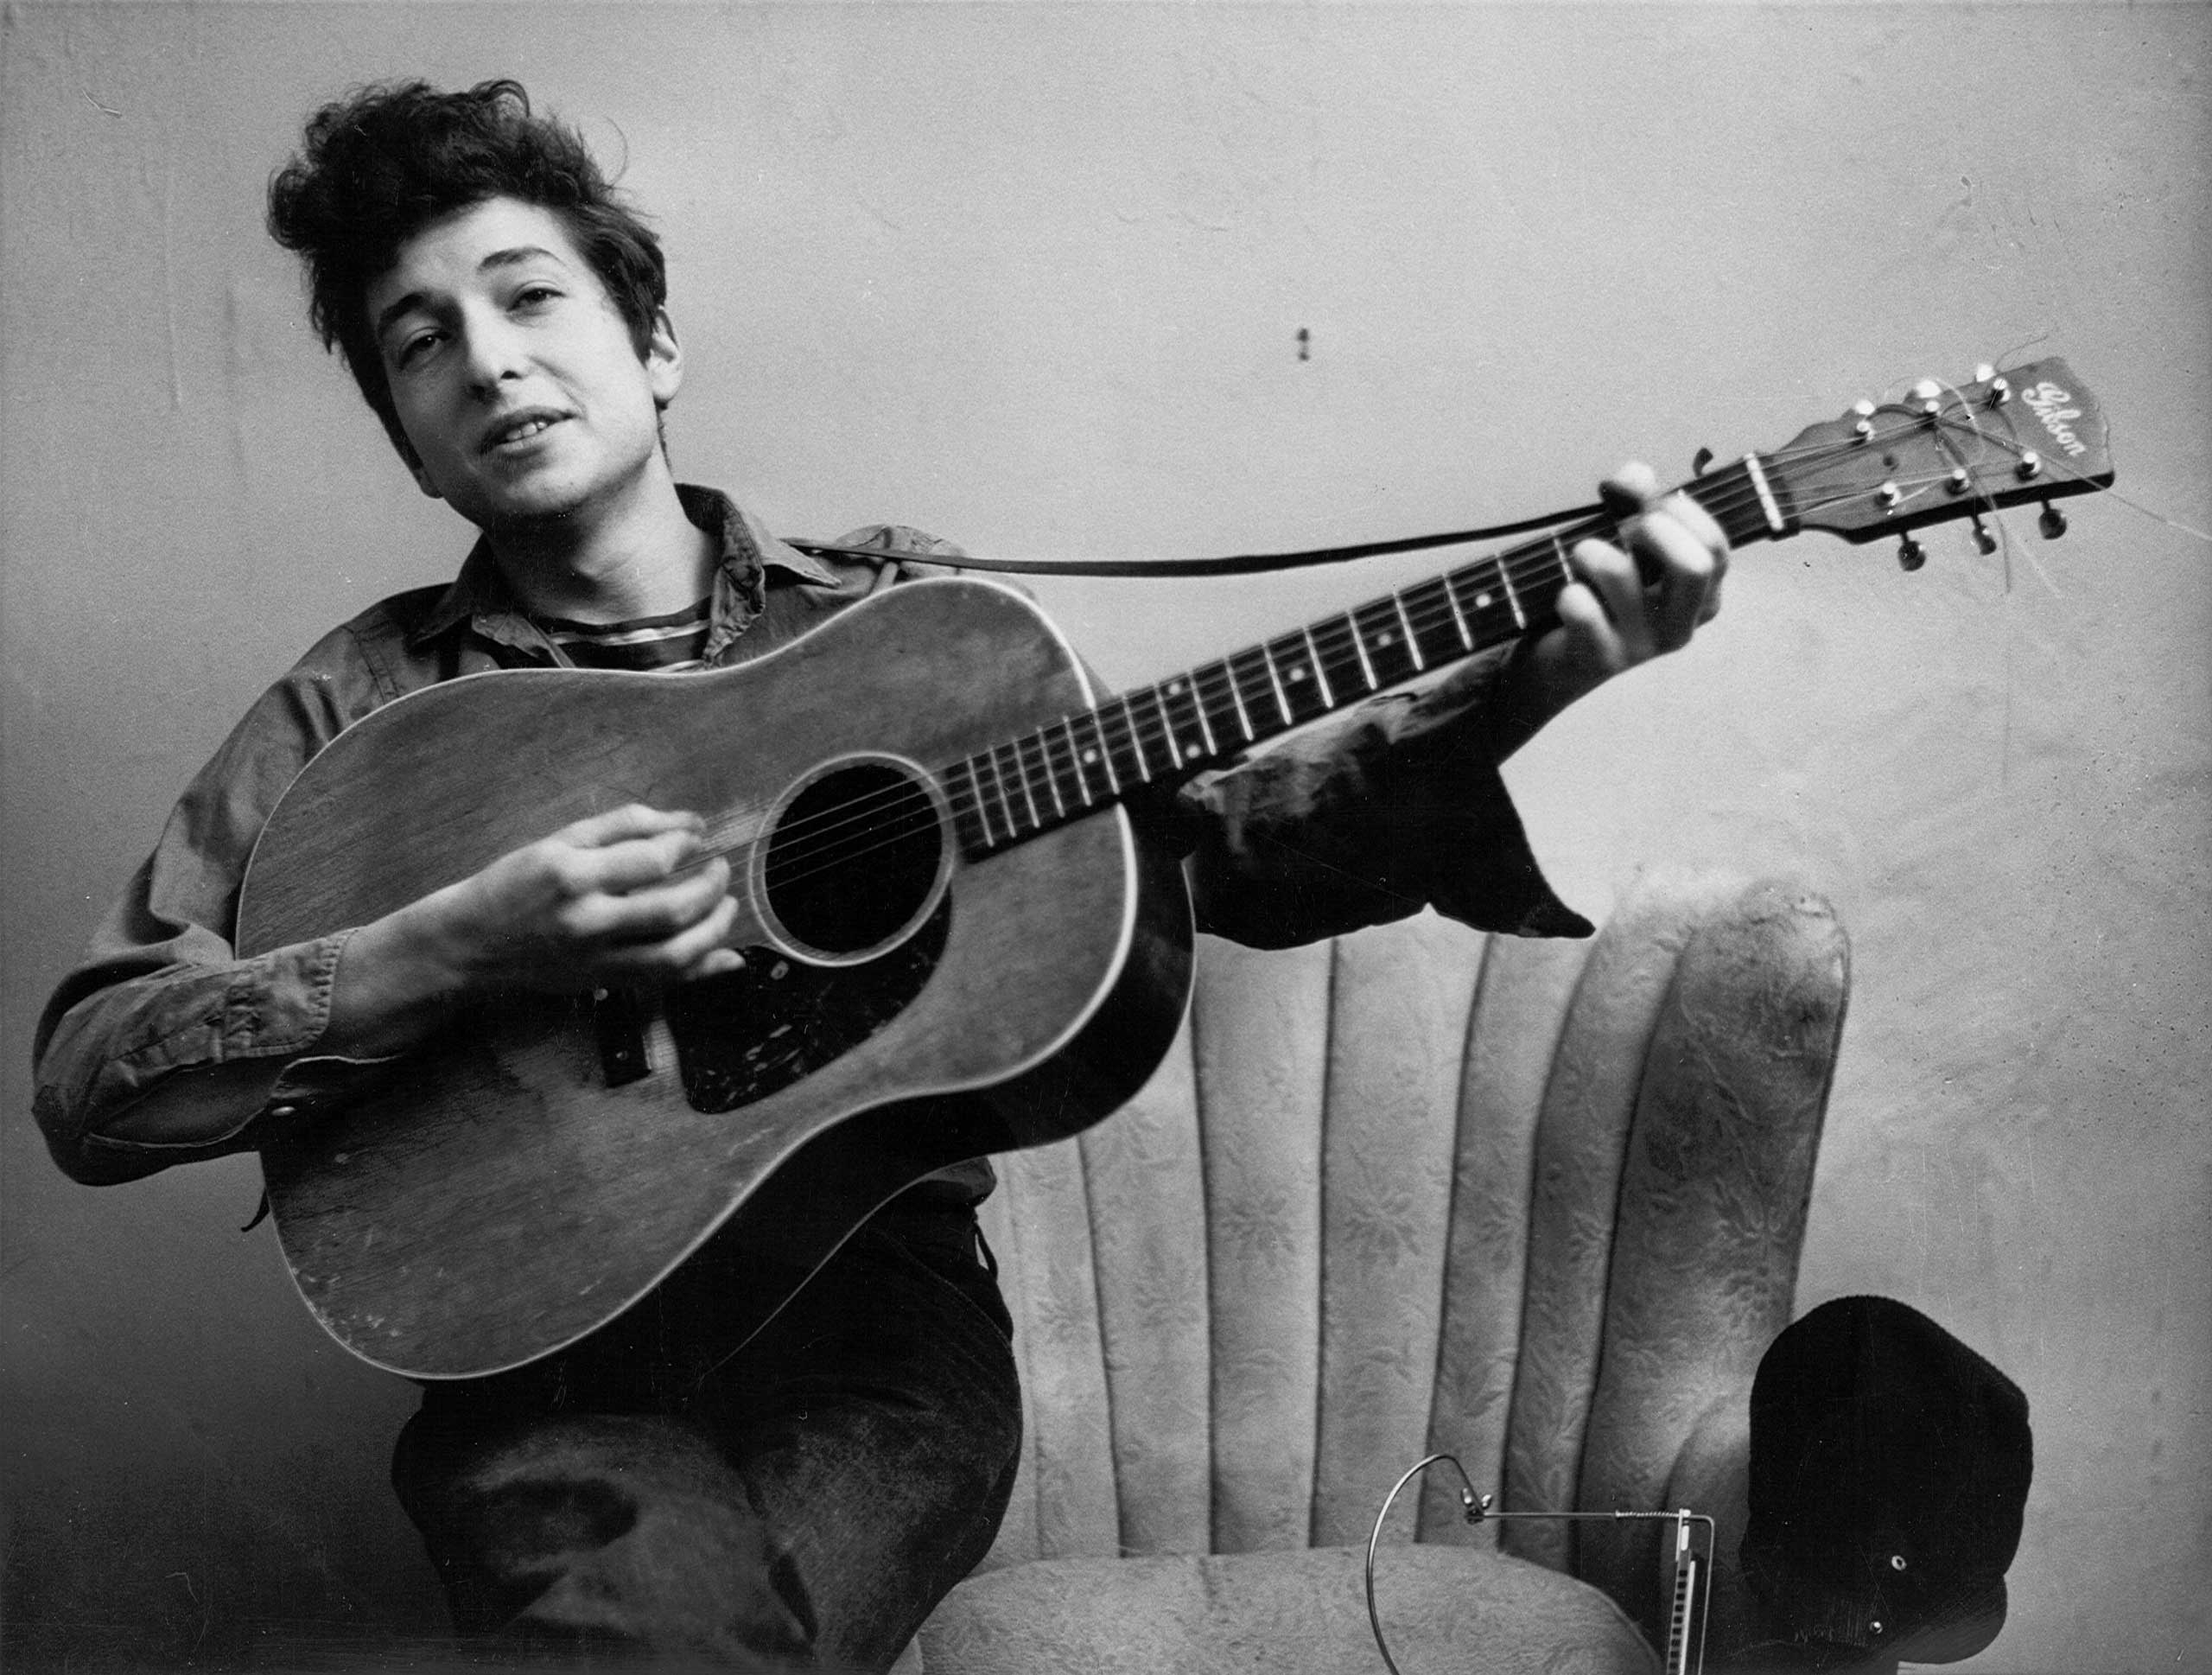 Bob Dylan Medal of Freedom for Music, 2012